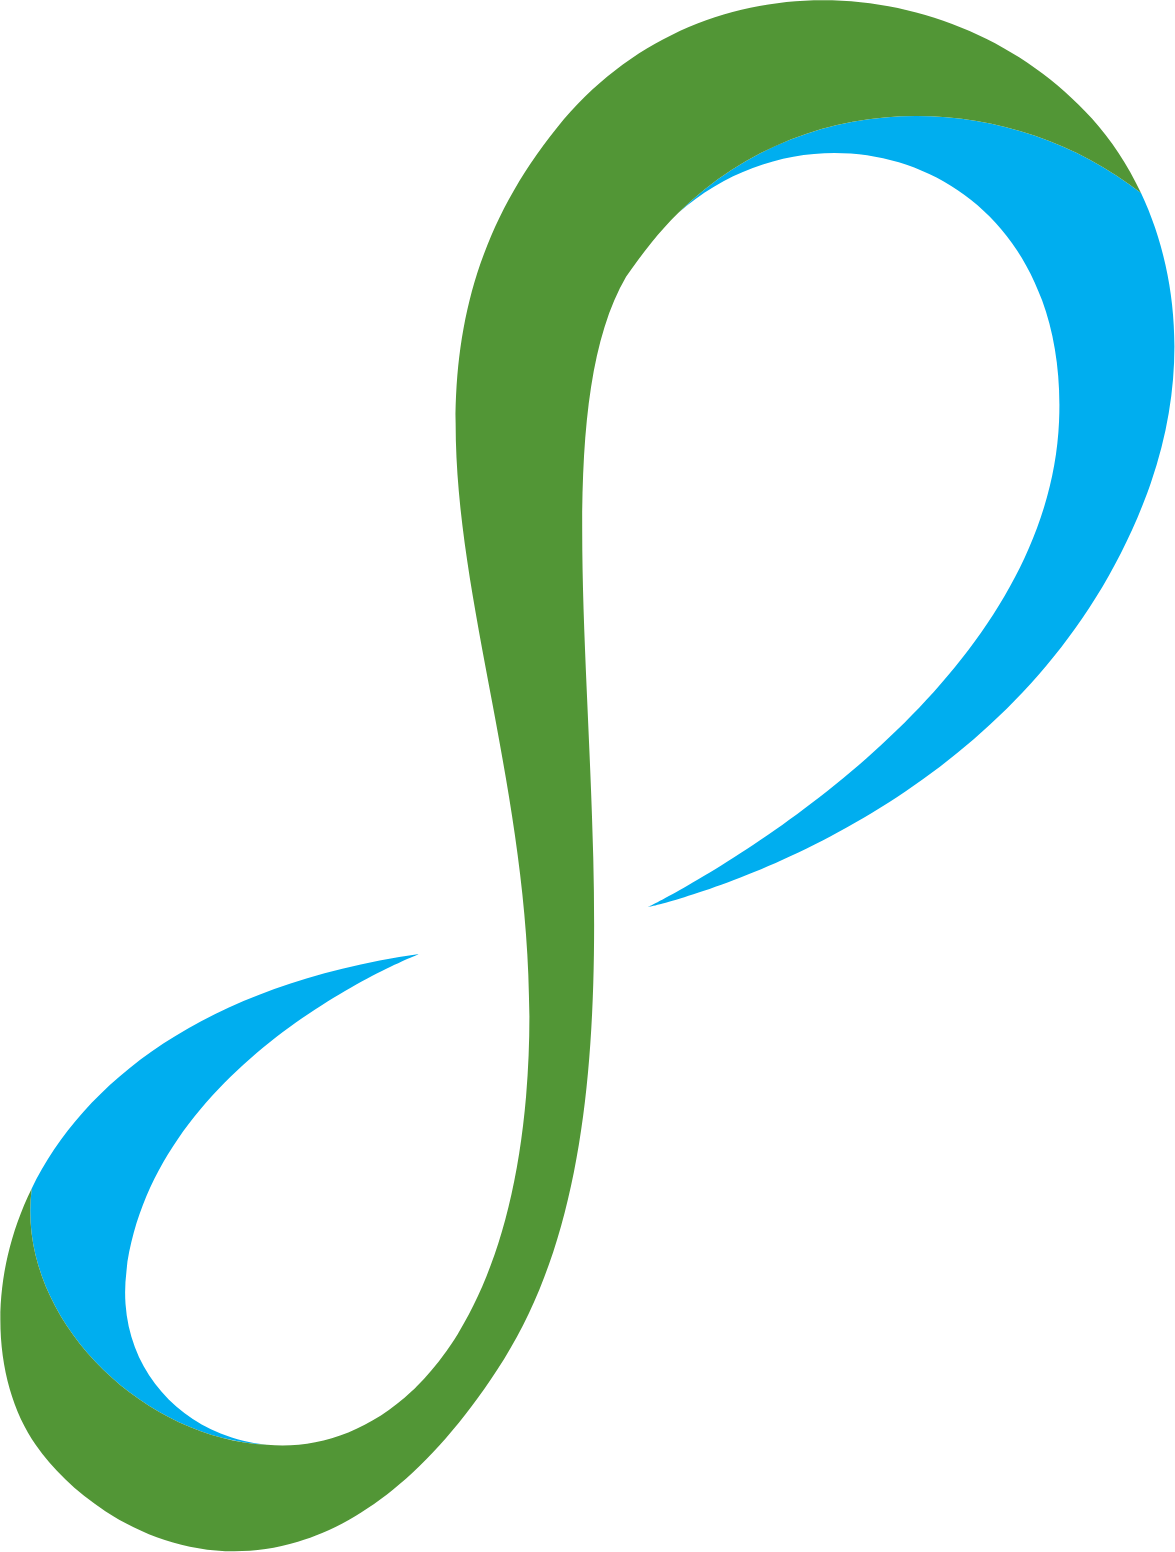 Aeterna Zentaris logo (PNG transparent)